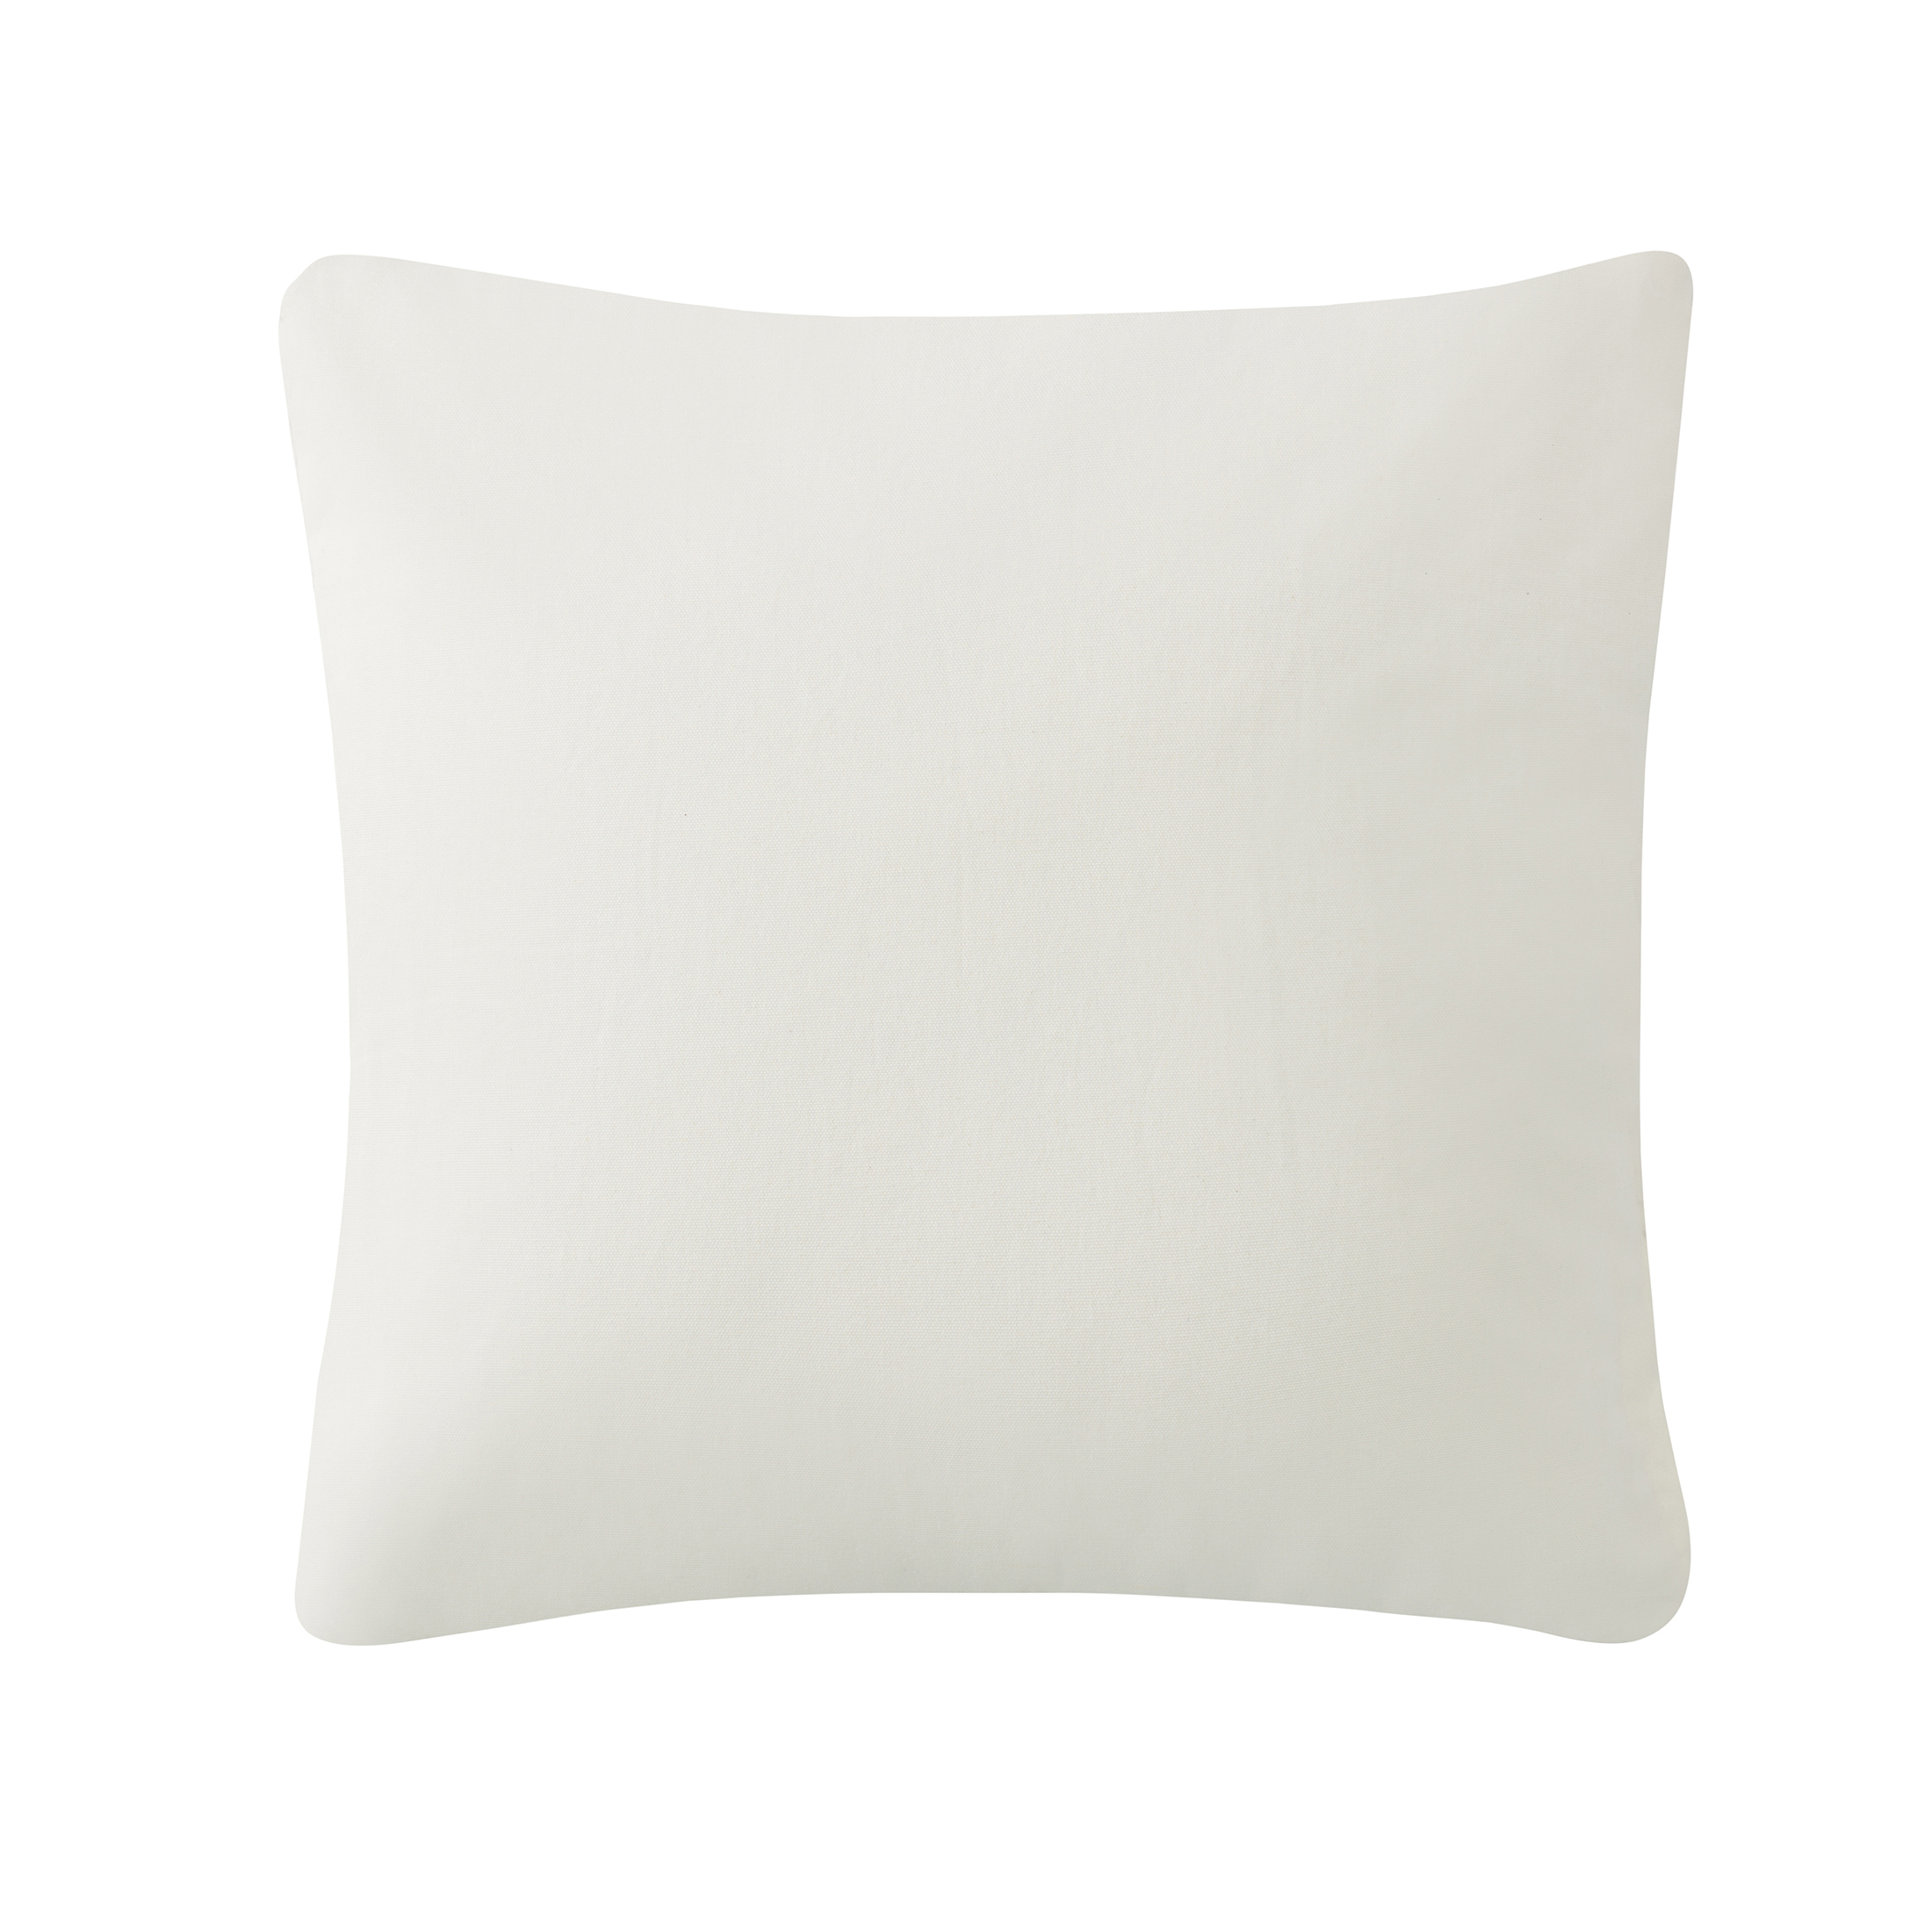 My Texas House Mckinney Woven Textured Diamond Stripe Square Decorative Pillow Cover, 20" X 20", Coconut Milk - image 2 of 12